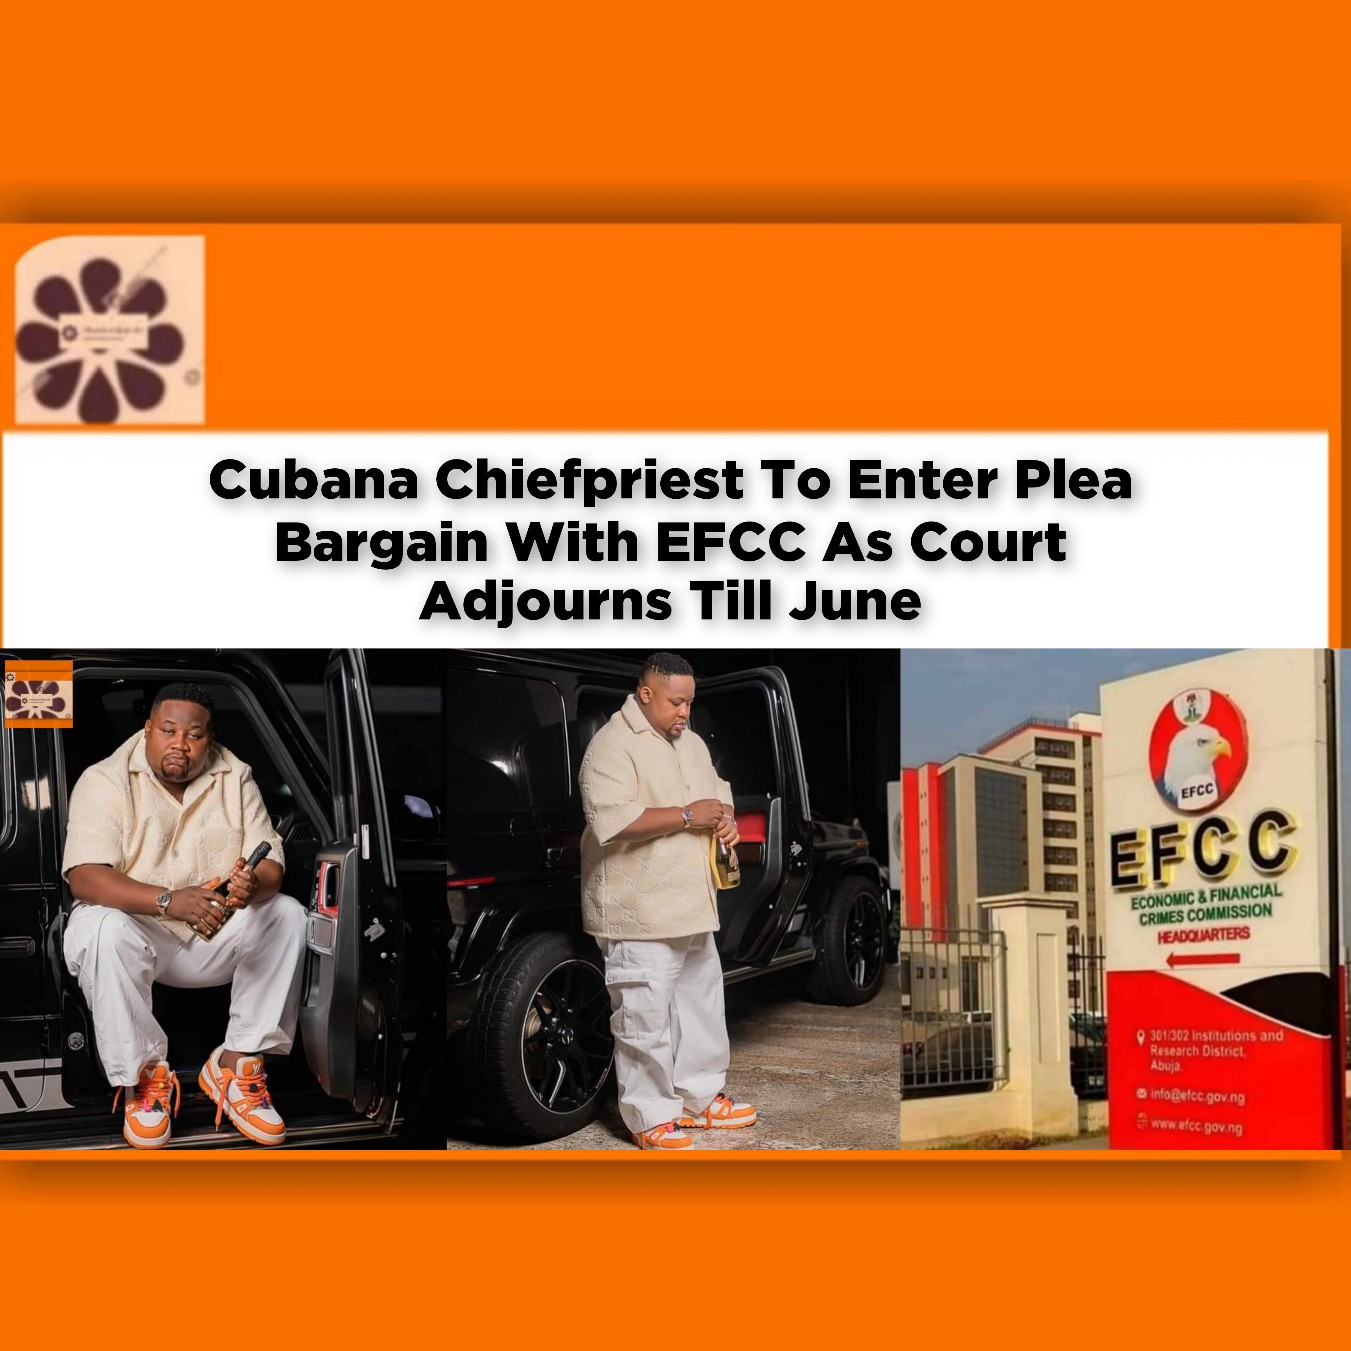 Cubana Chiefpriest To Enter Plea Bargain With EFCC As Court Adjourns Till June ~ OsazuwaAkonedo #Islamabad